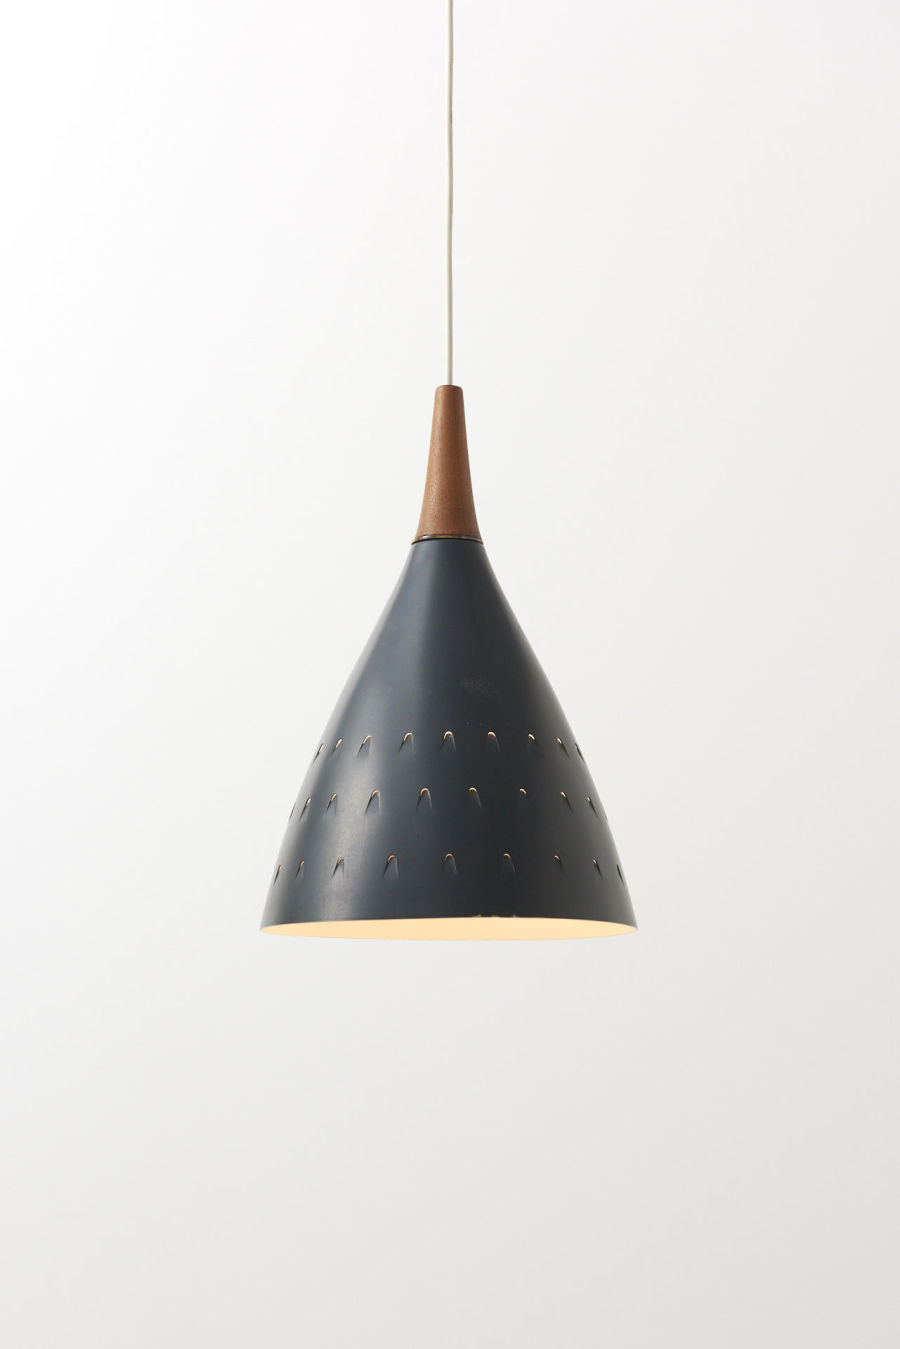 modestfurniture-vintage-2838-pendant-lamp-perforated-steel-holm-sorensen-style01